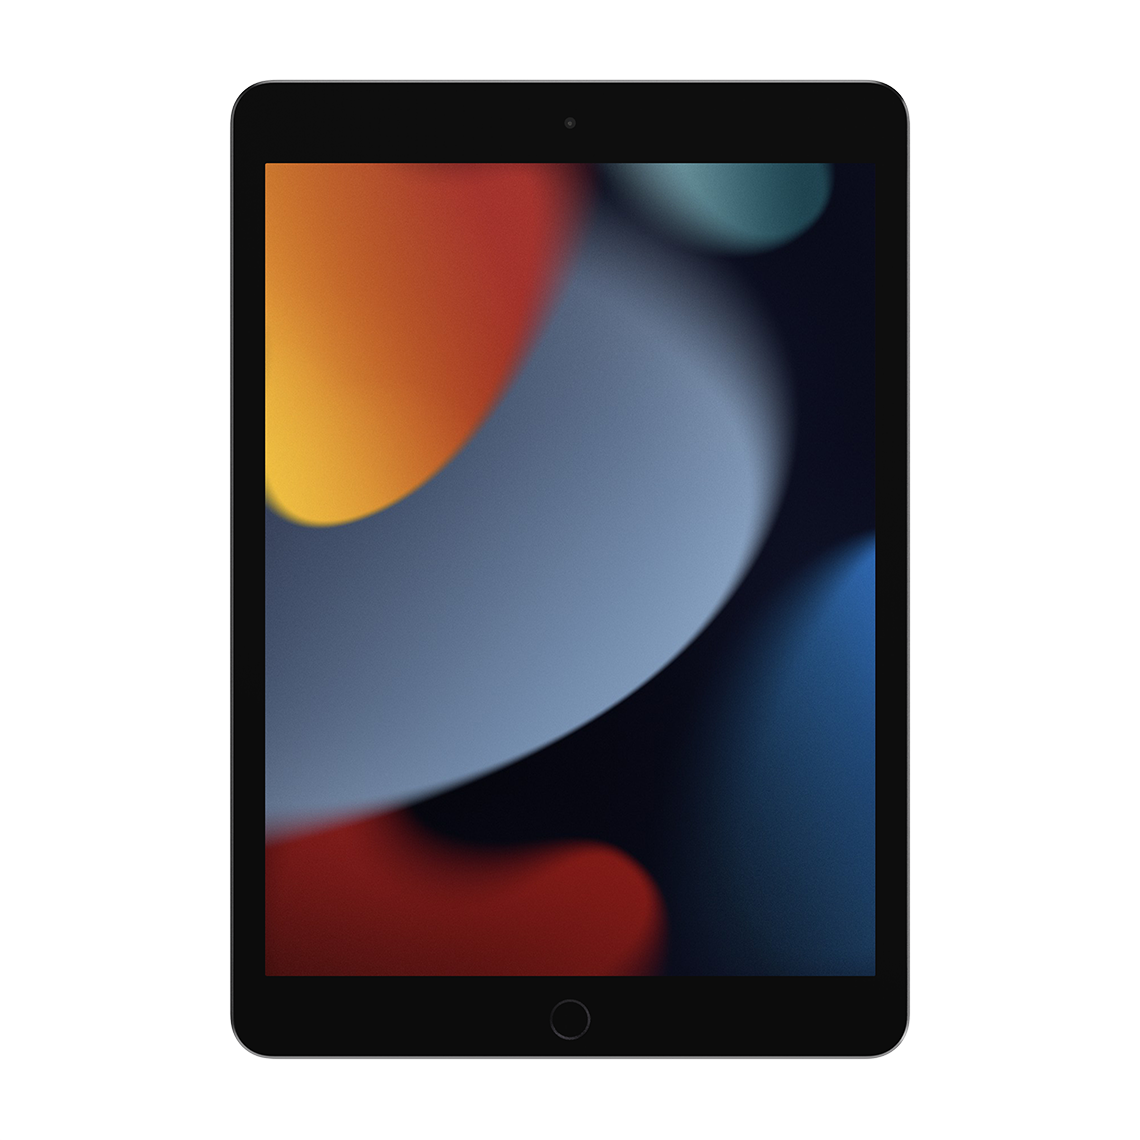 Apple iPad 9th Generation | iPowerResale